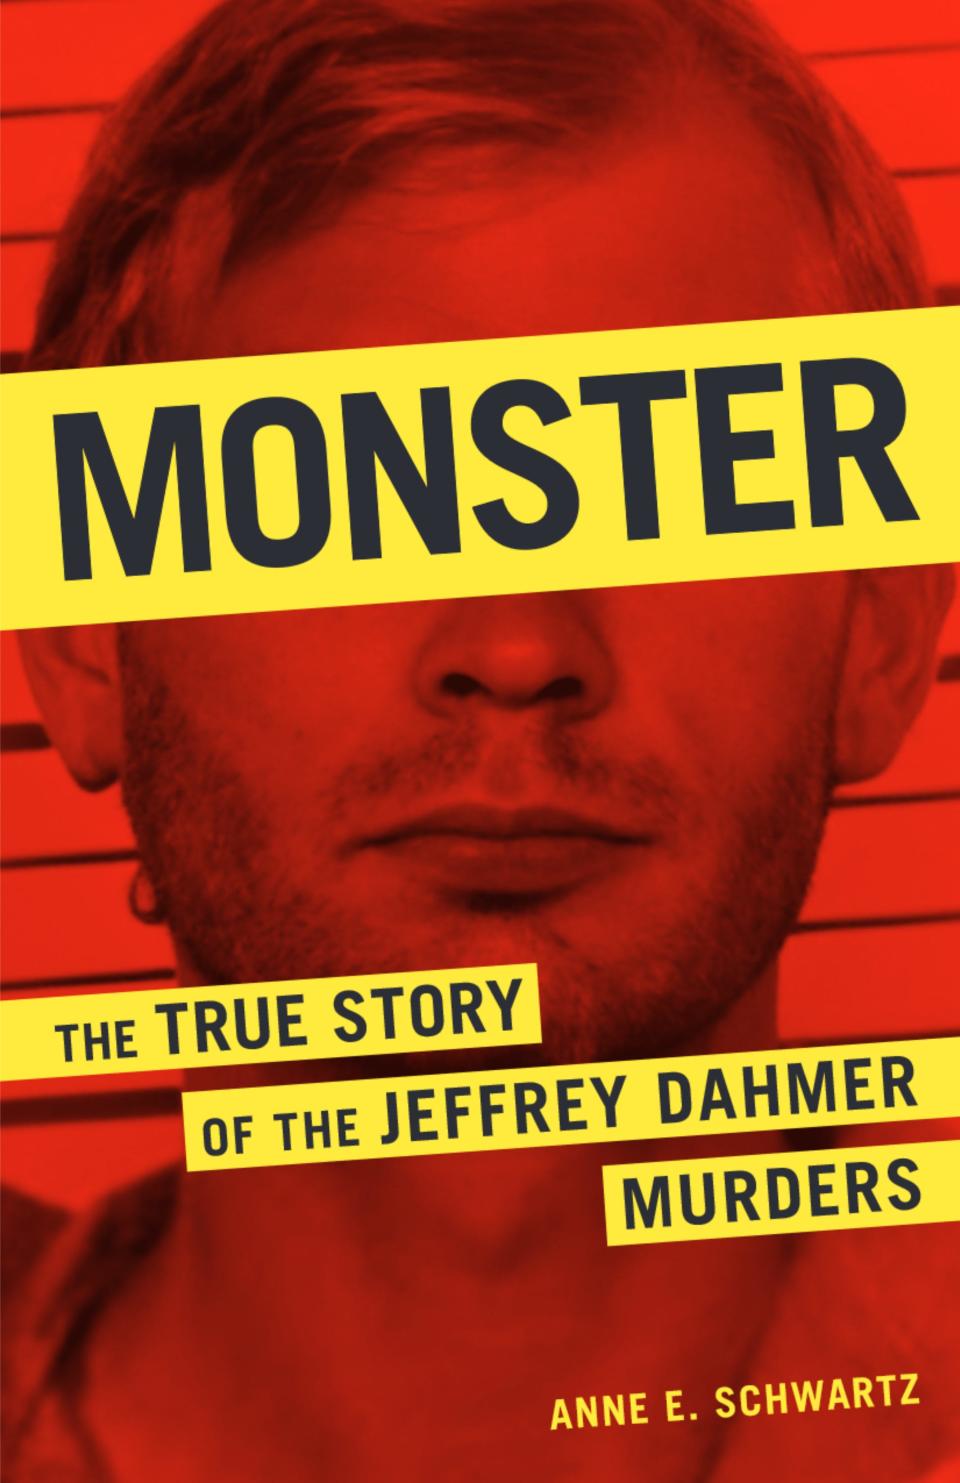 Former Milwaukee Journal reporter and Milwaukee Police Department spokesperson Anne E. Schwartz has written an update to her 1991 book about the Jeffrey Dahmer case.